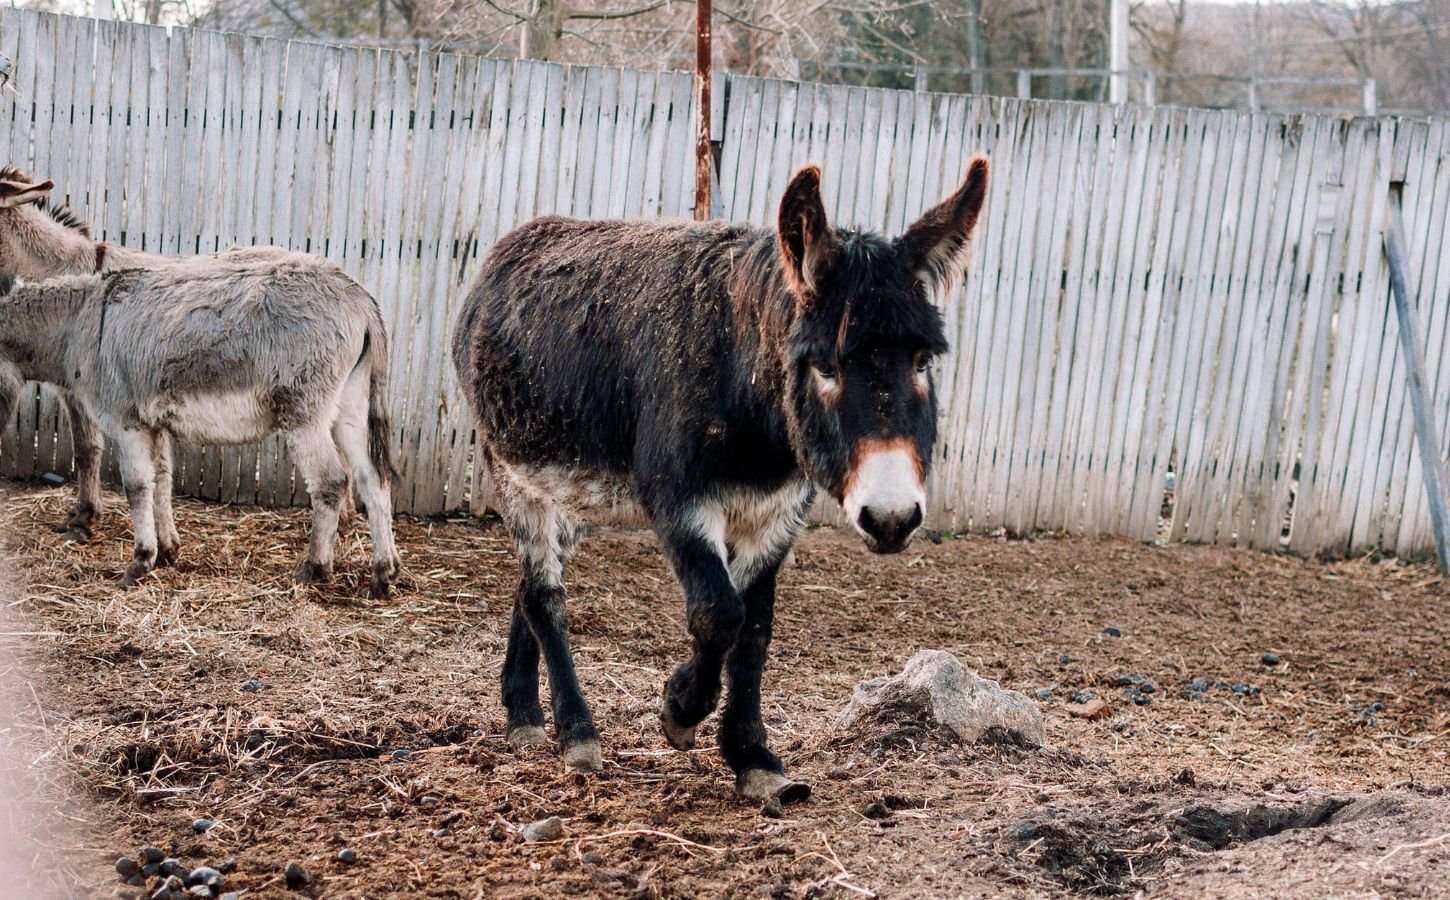 A donkey on a meat farm